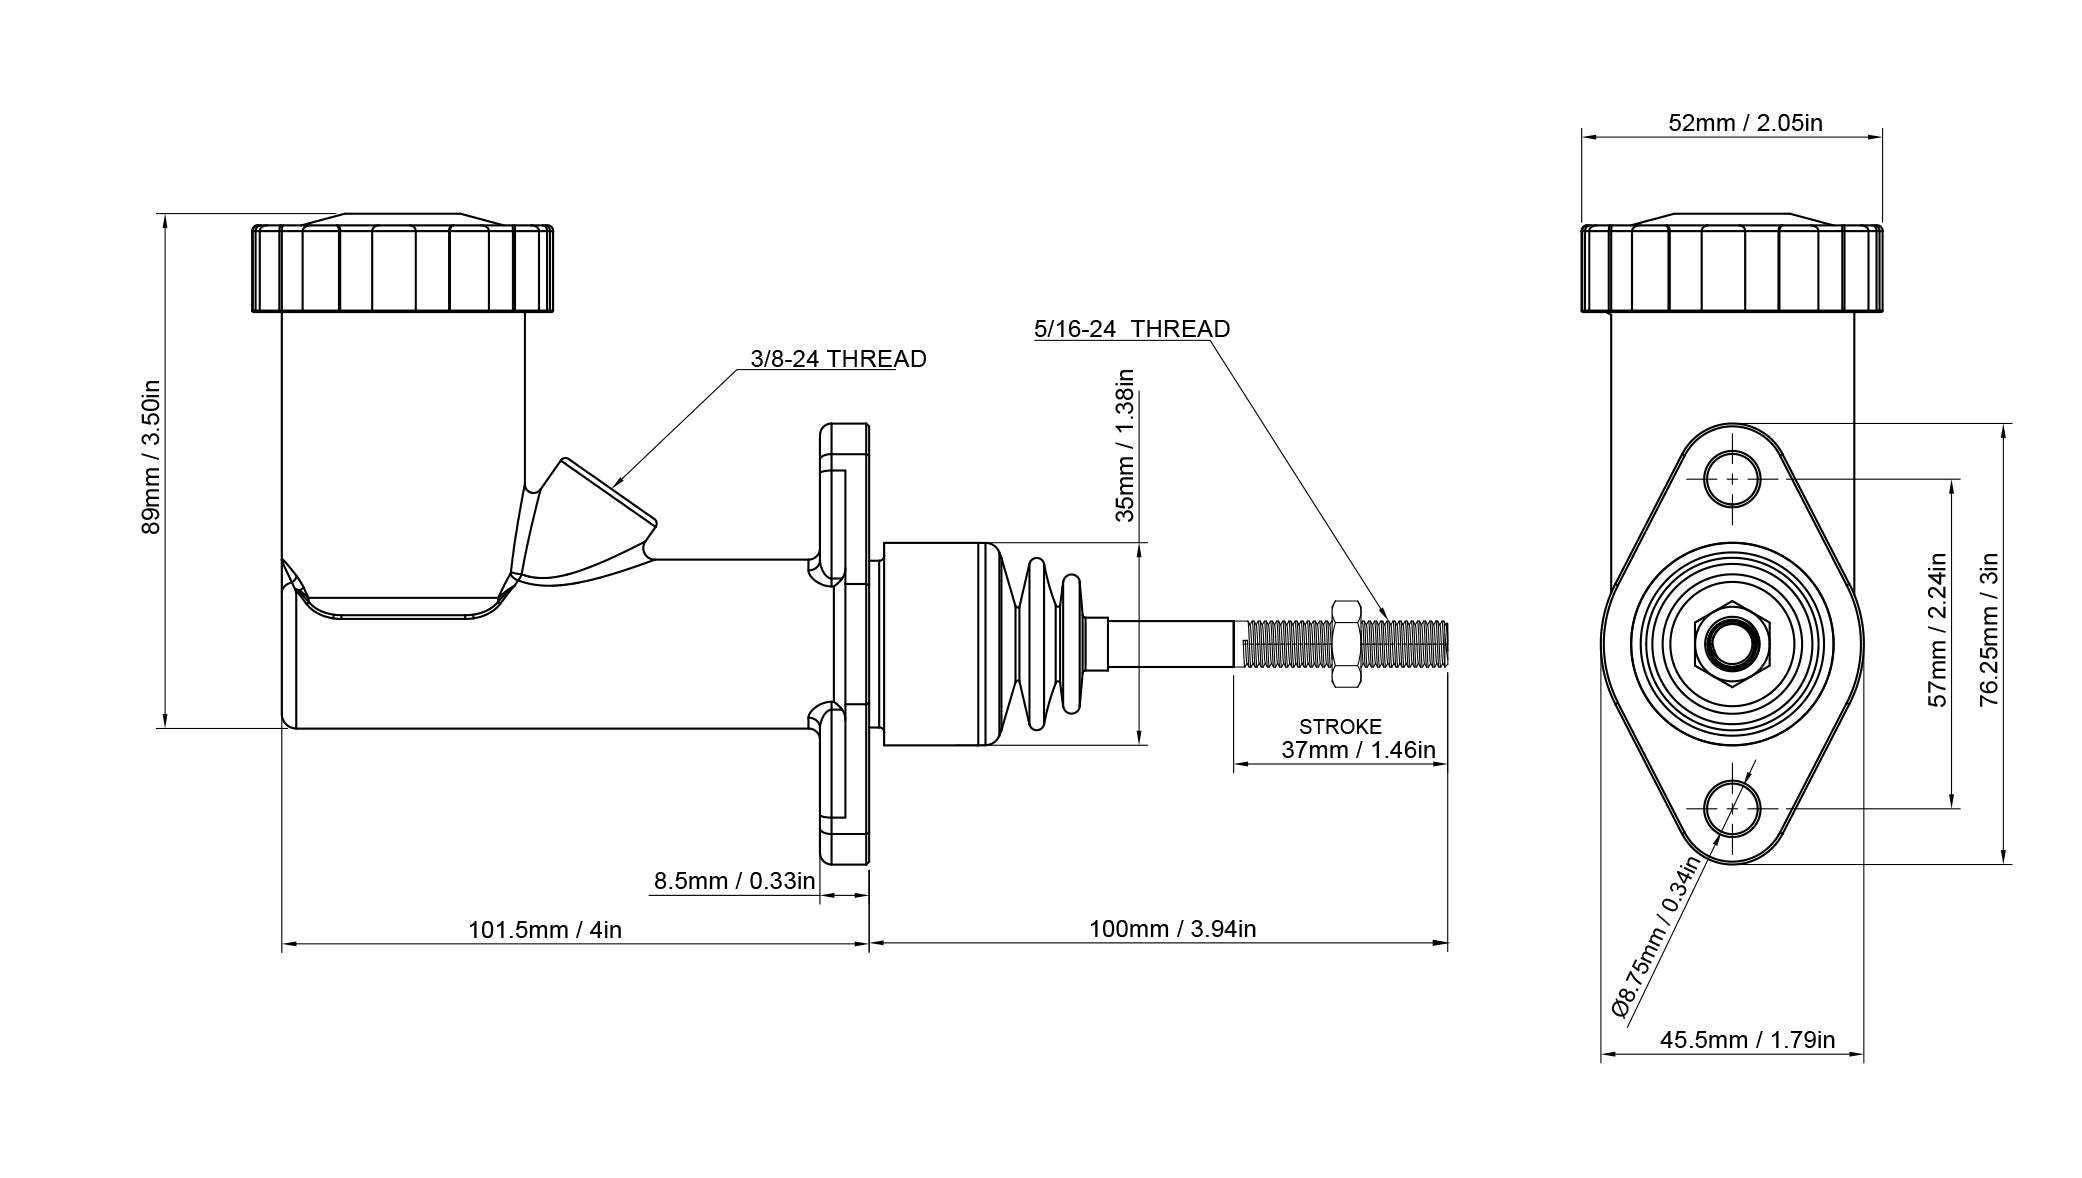 Stand-alone 7/8" internal reservoir master cylinder